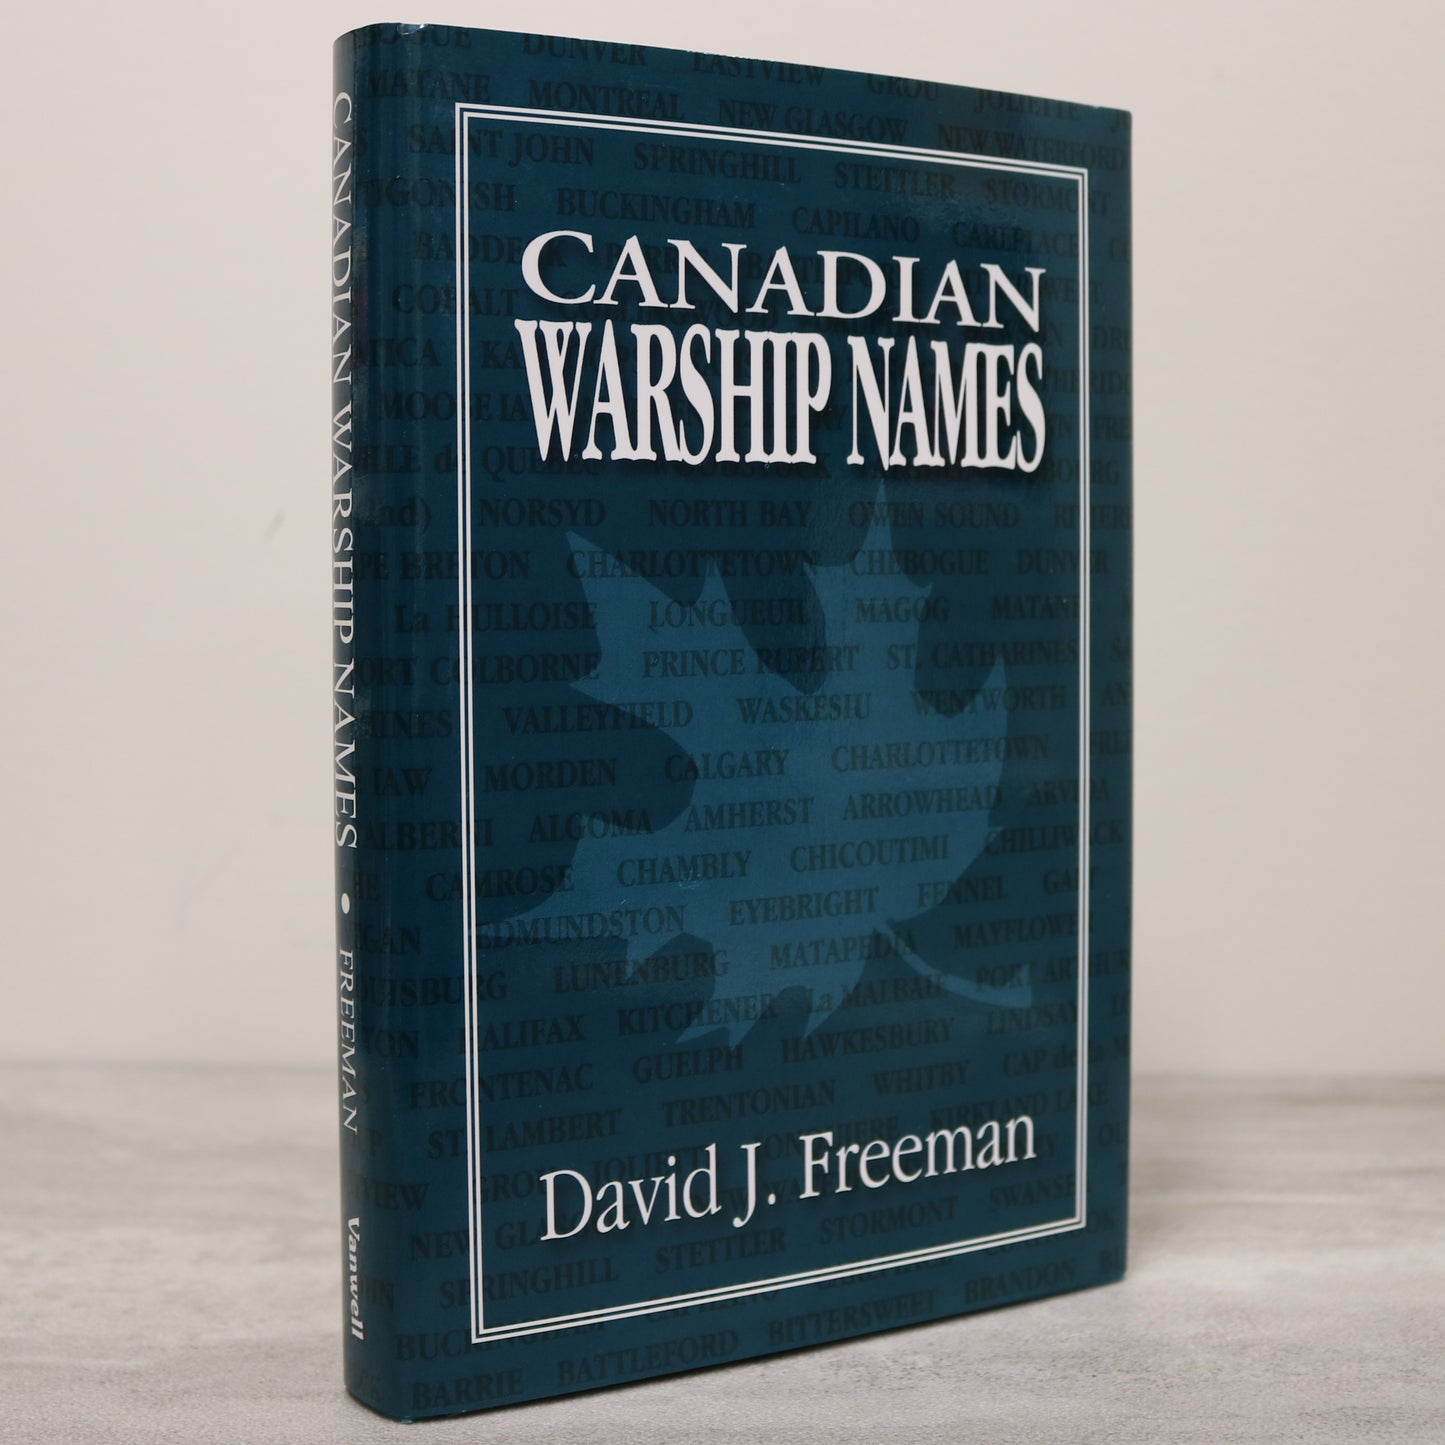 Canadian Warship Names Canada Navy RCN Maritime Military History Used Book